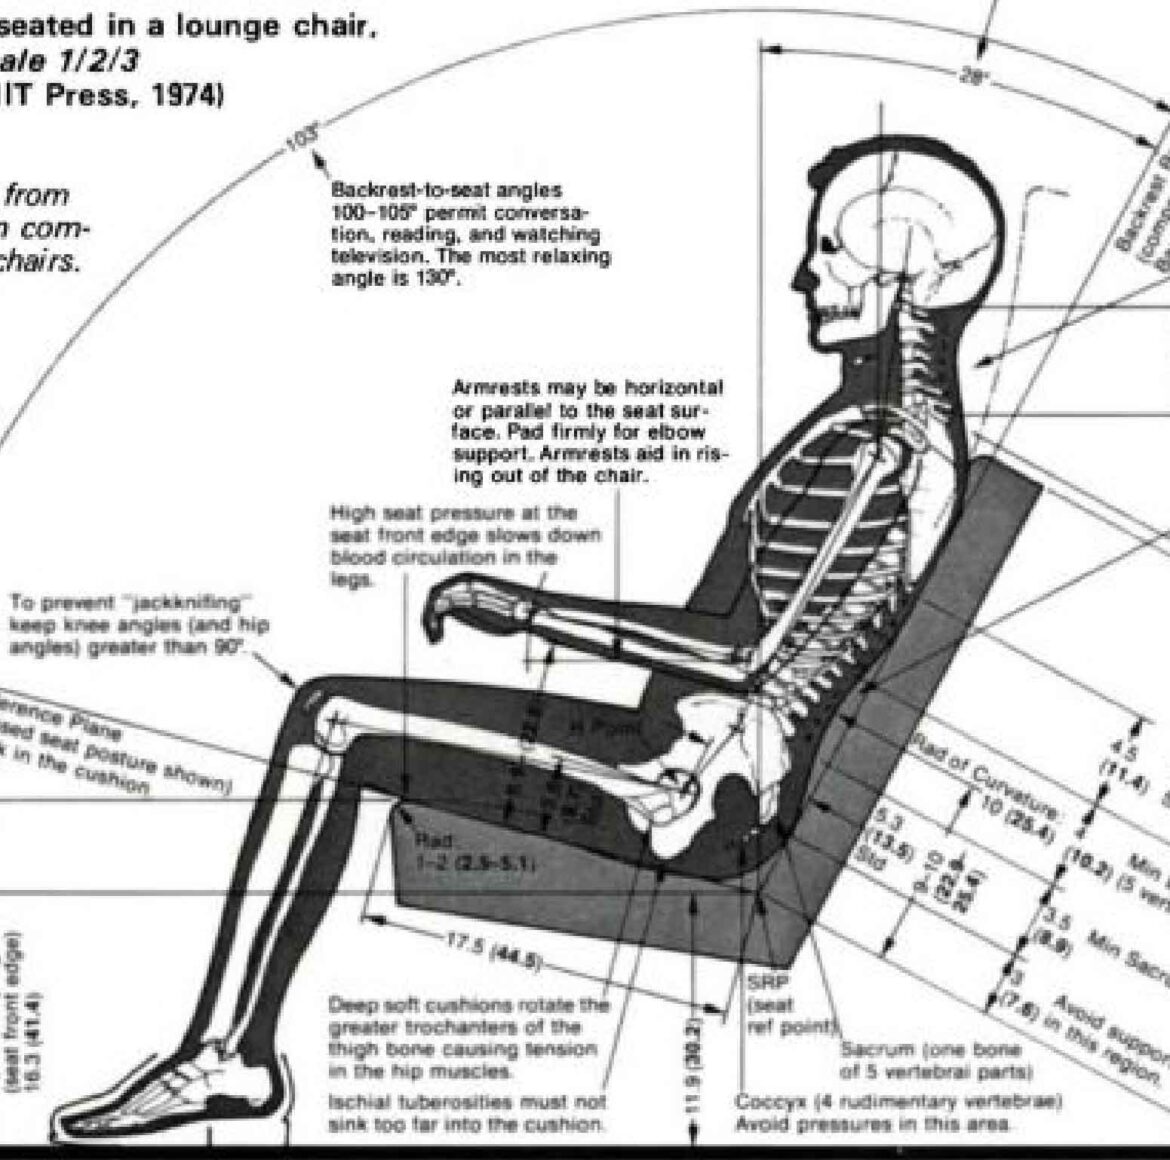 The Revolutionary IHMS Chair Ergonomic Sitting Redefined